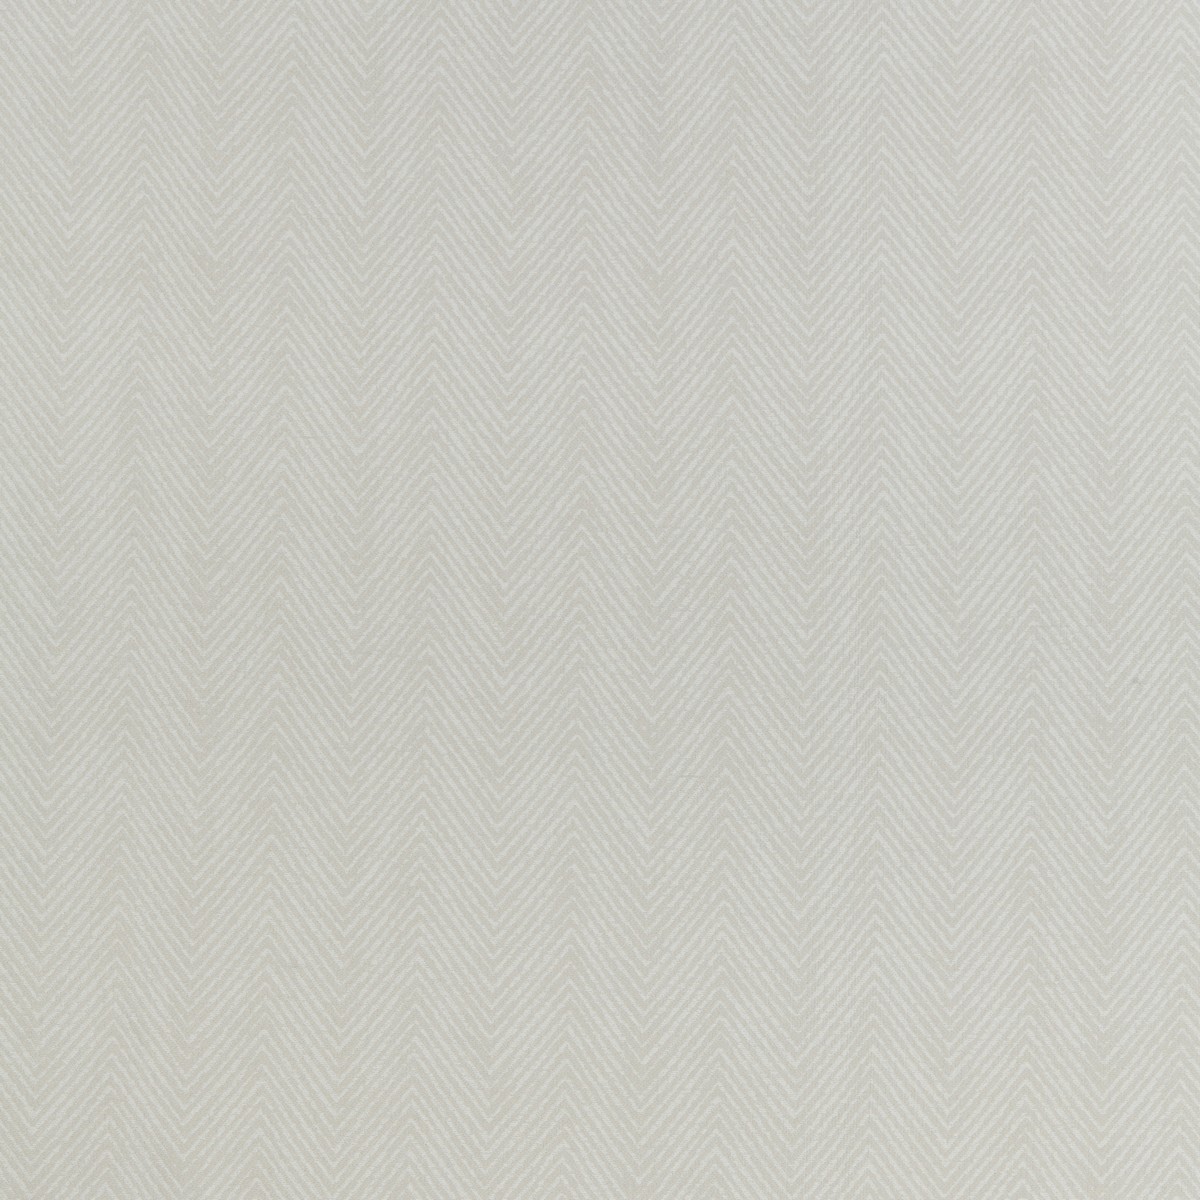 Sula Ivory Fabric by iLiv